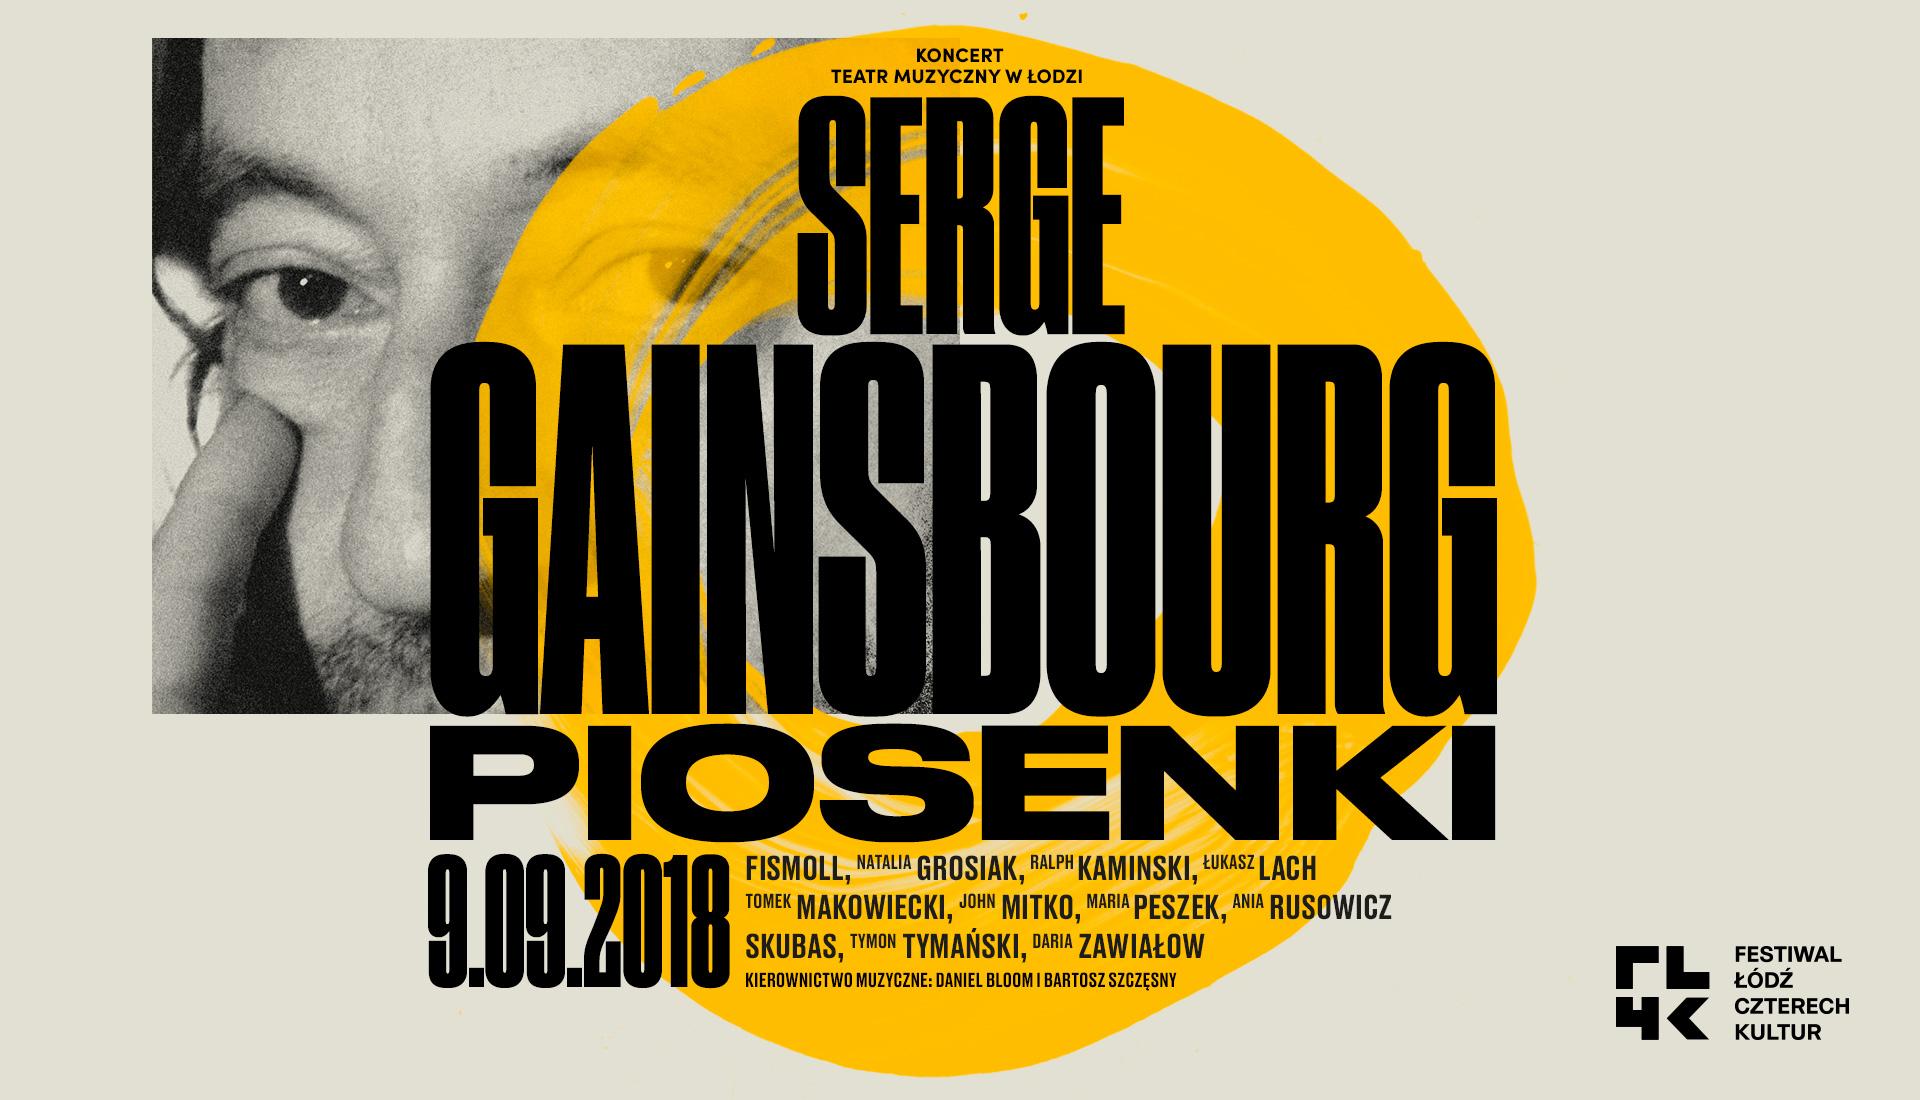 Plakat promujący koncert "Serge Gainsbourg. Piosenki"